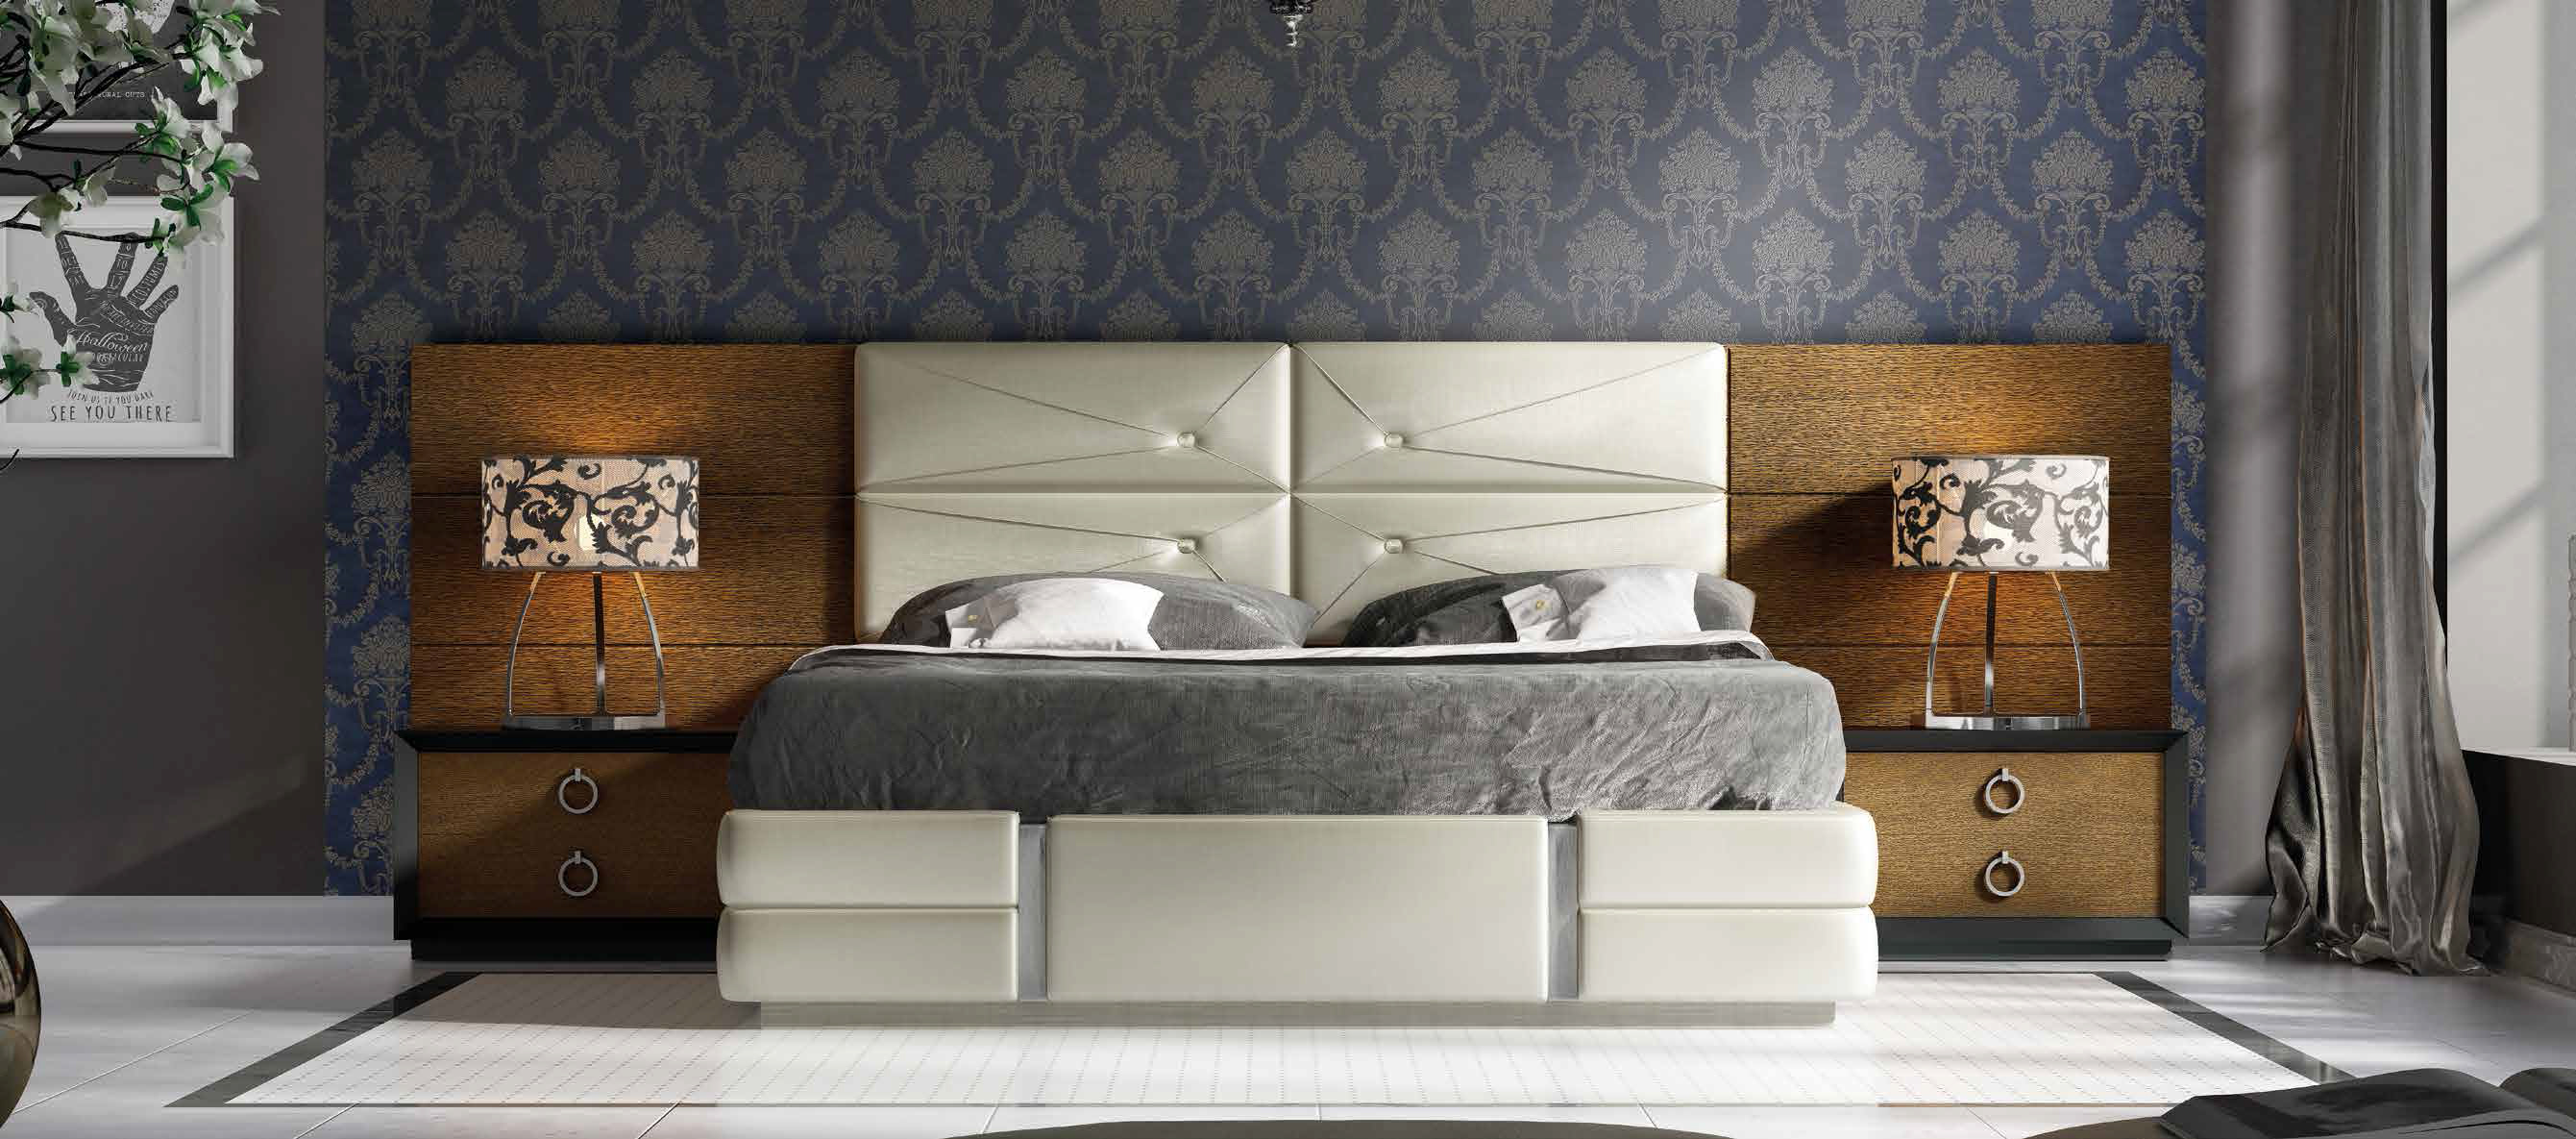 Bedroom Furniture Beds with storage DOR 66